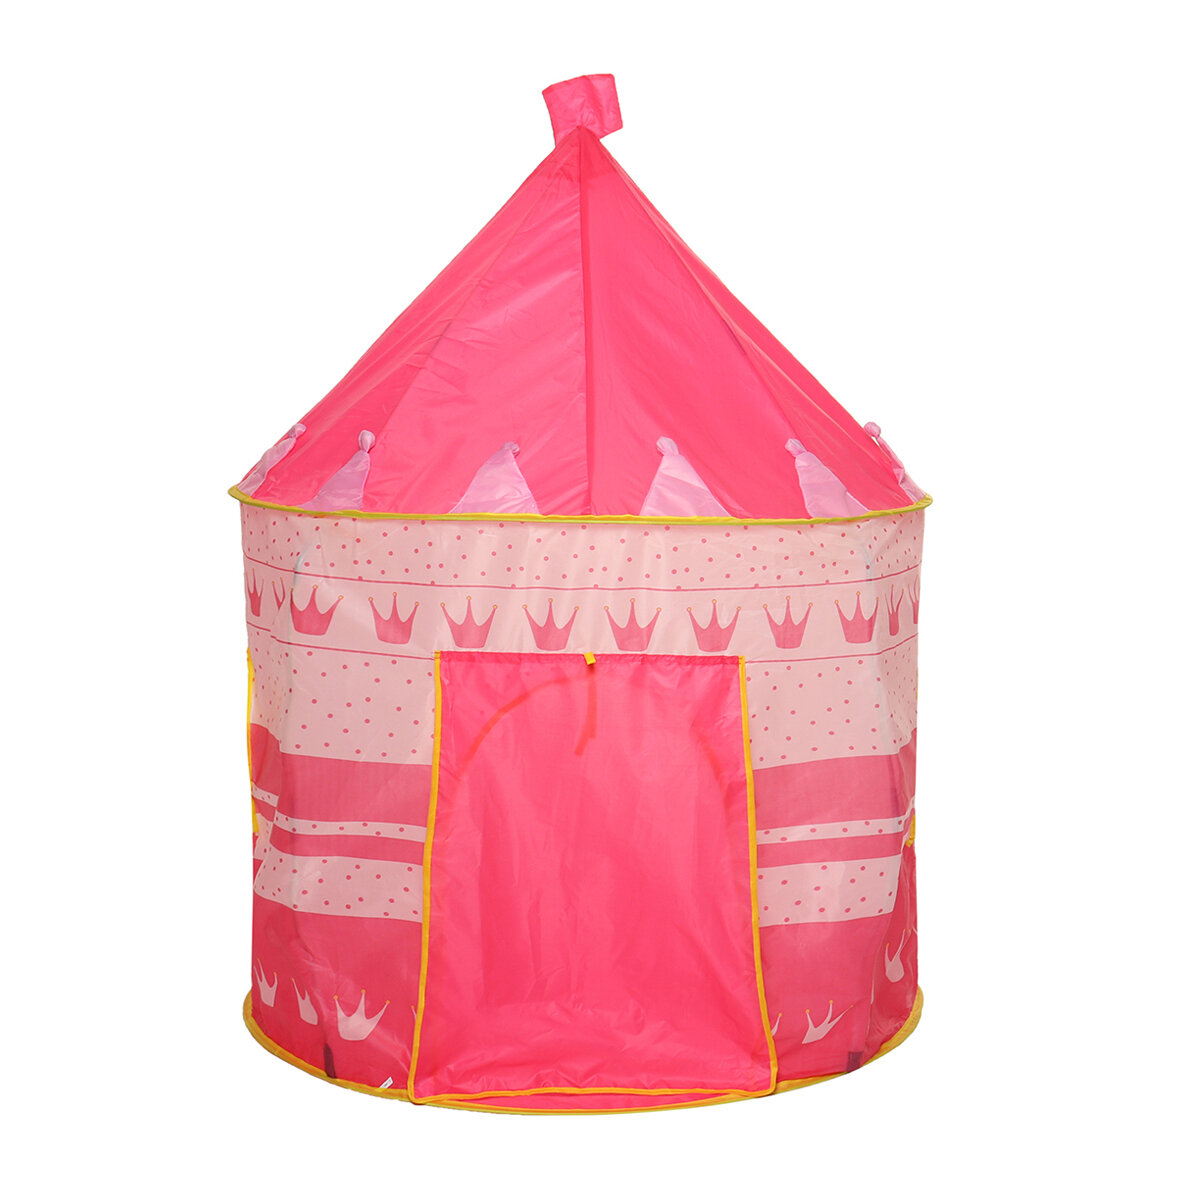 IPree® Children Play Tent Folding Storage Kids House Playhouse Palace Castle 